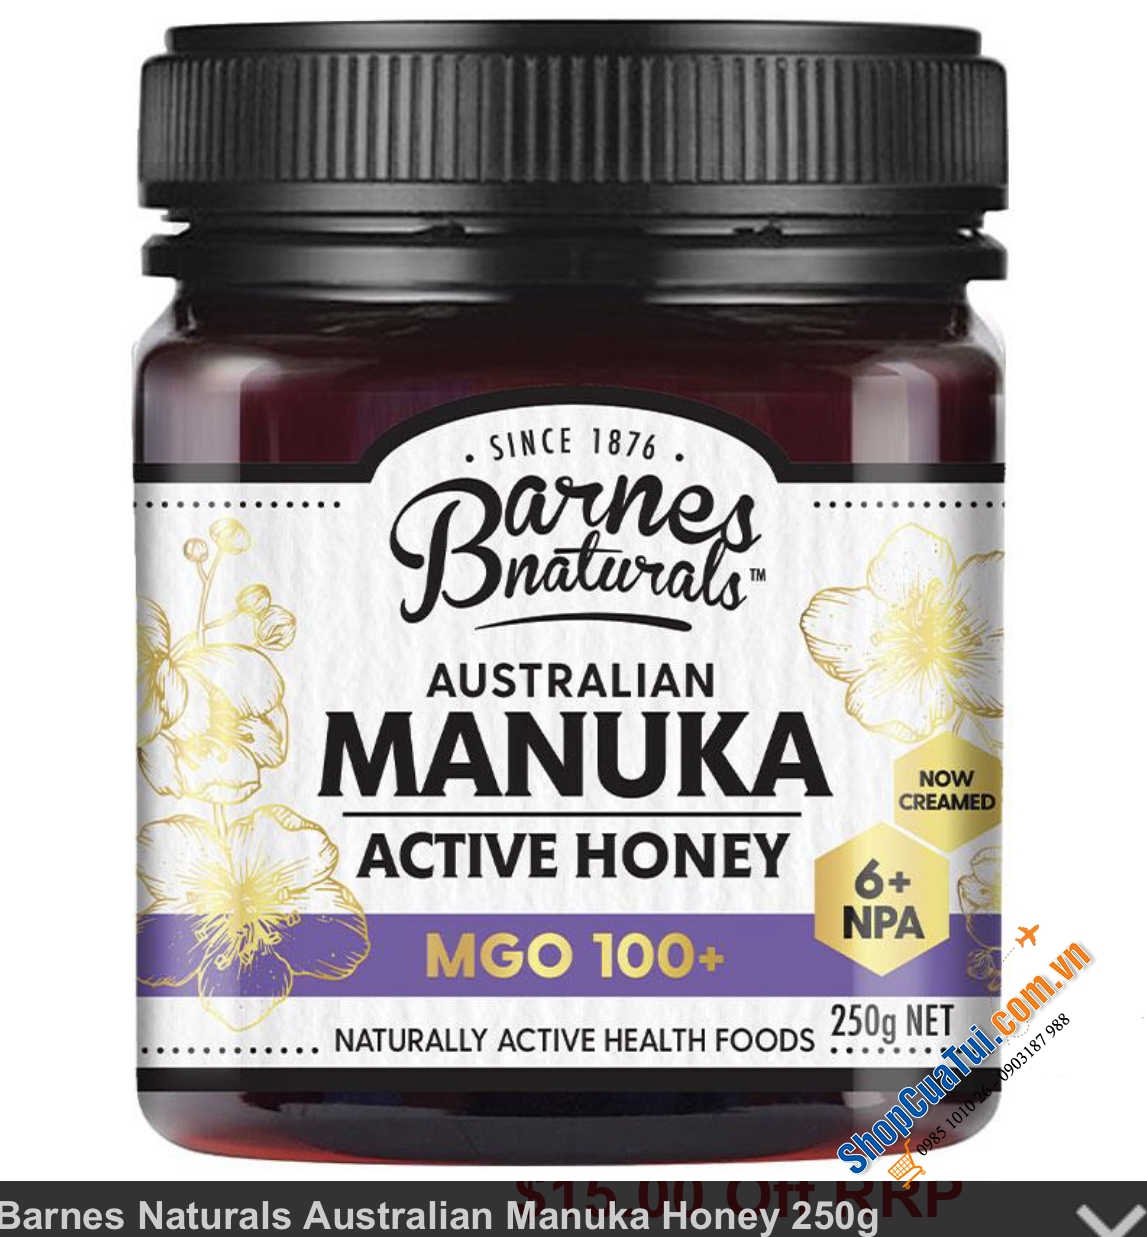 Mật ong Barnes Naturals Australian Manuka Honey 250g MGO 100+ tương đương NPA 6+